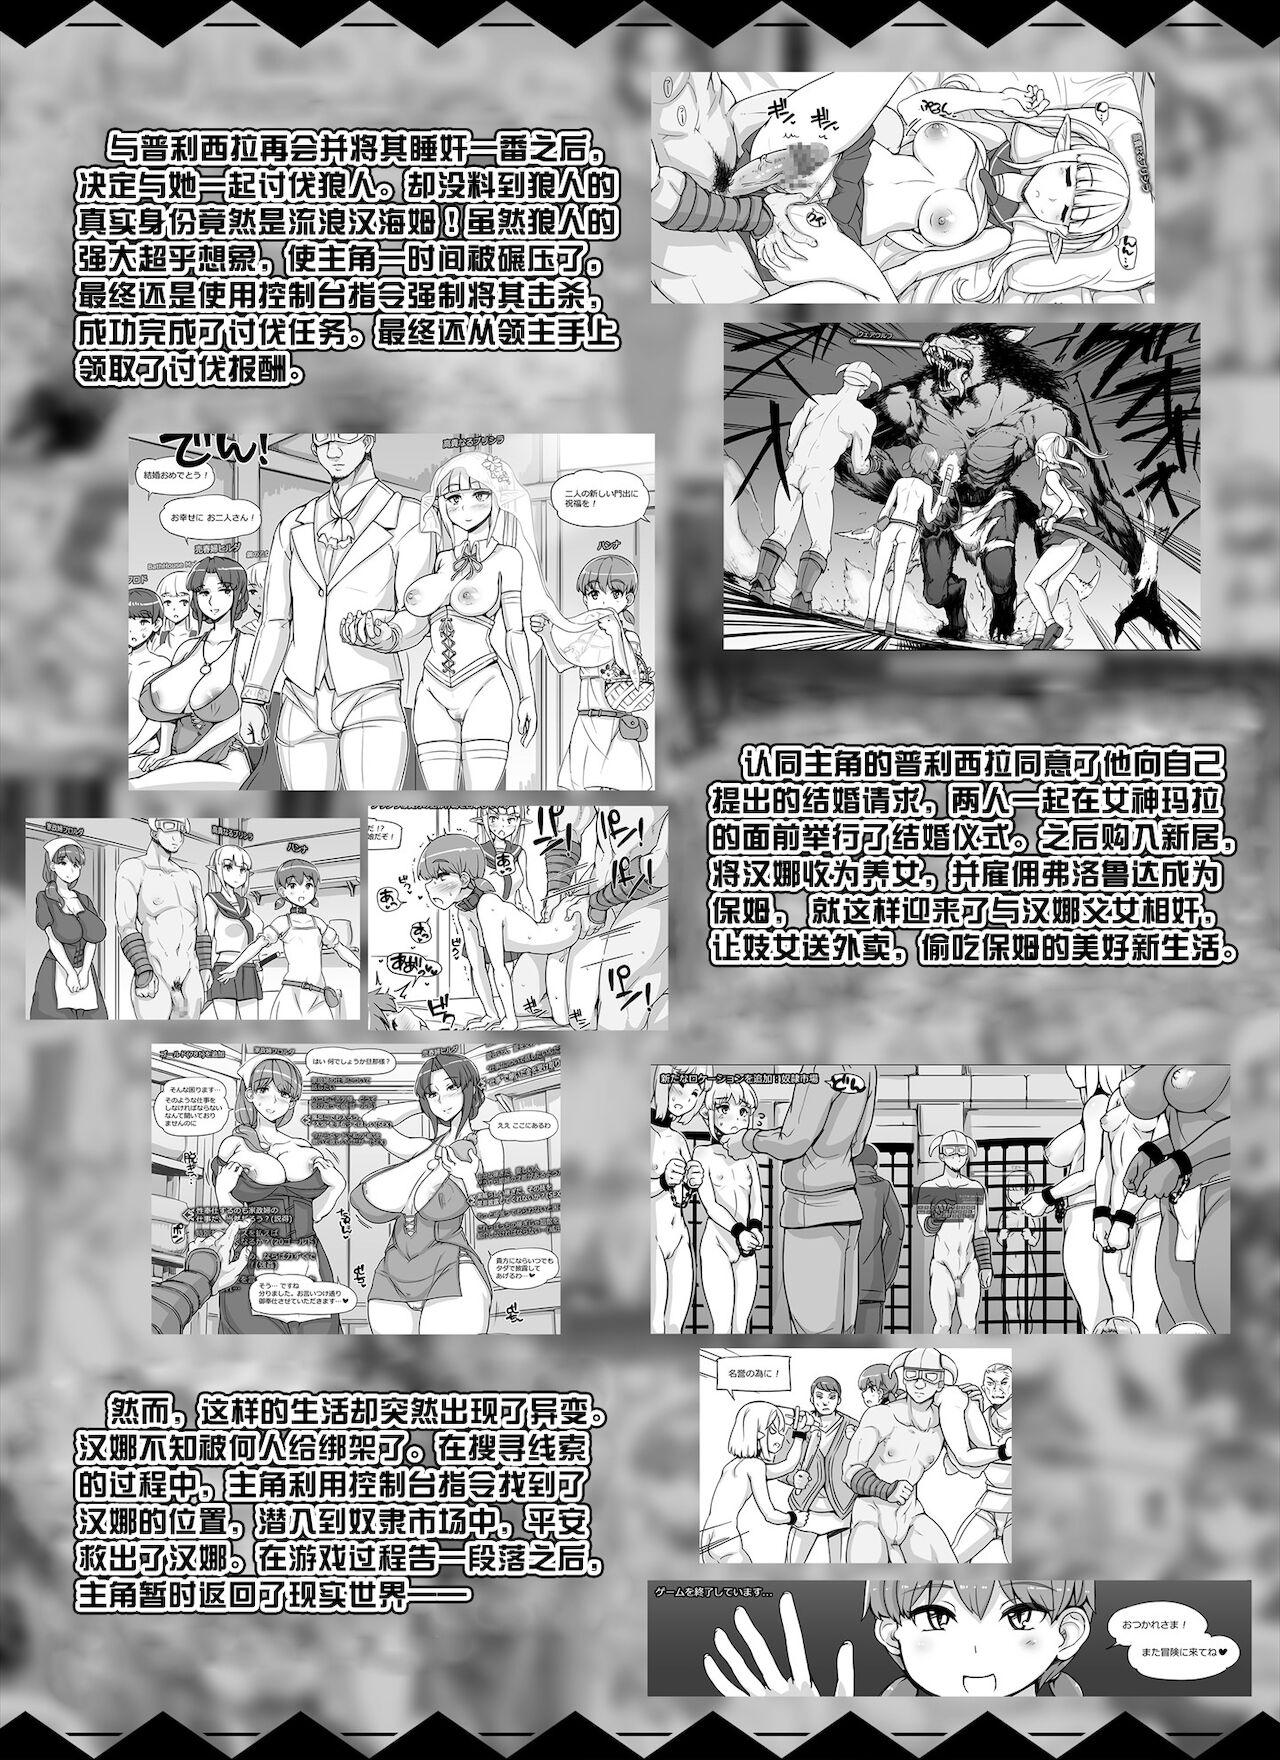 Nurugel NPC Kan MOD 2 - The elder scrolls Curvy - Page 3